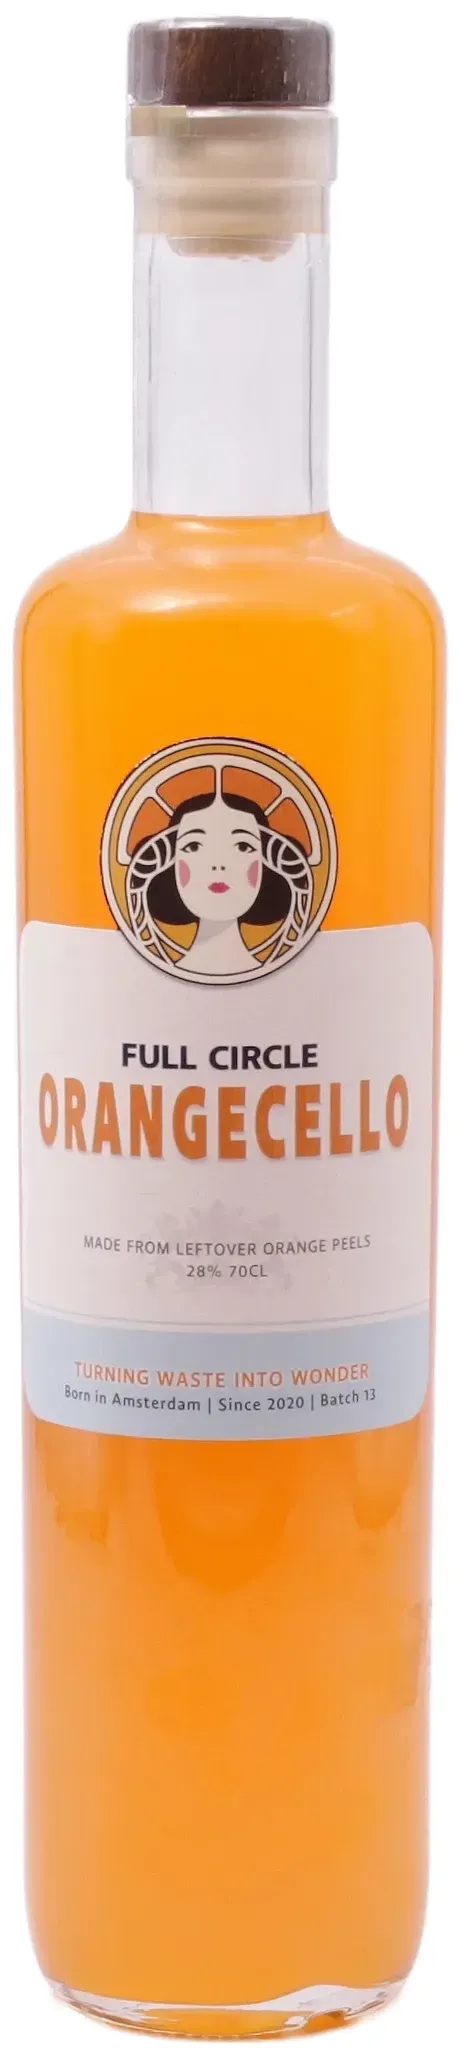 Full Circle Orangecello